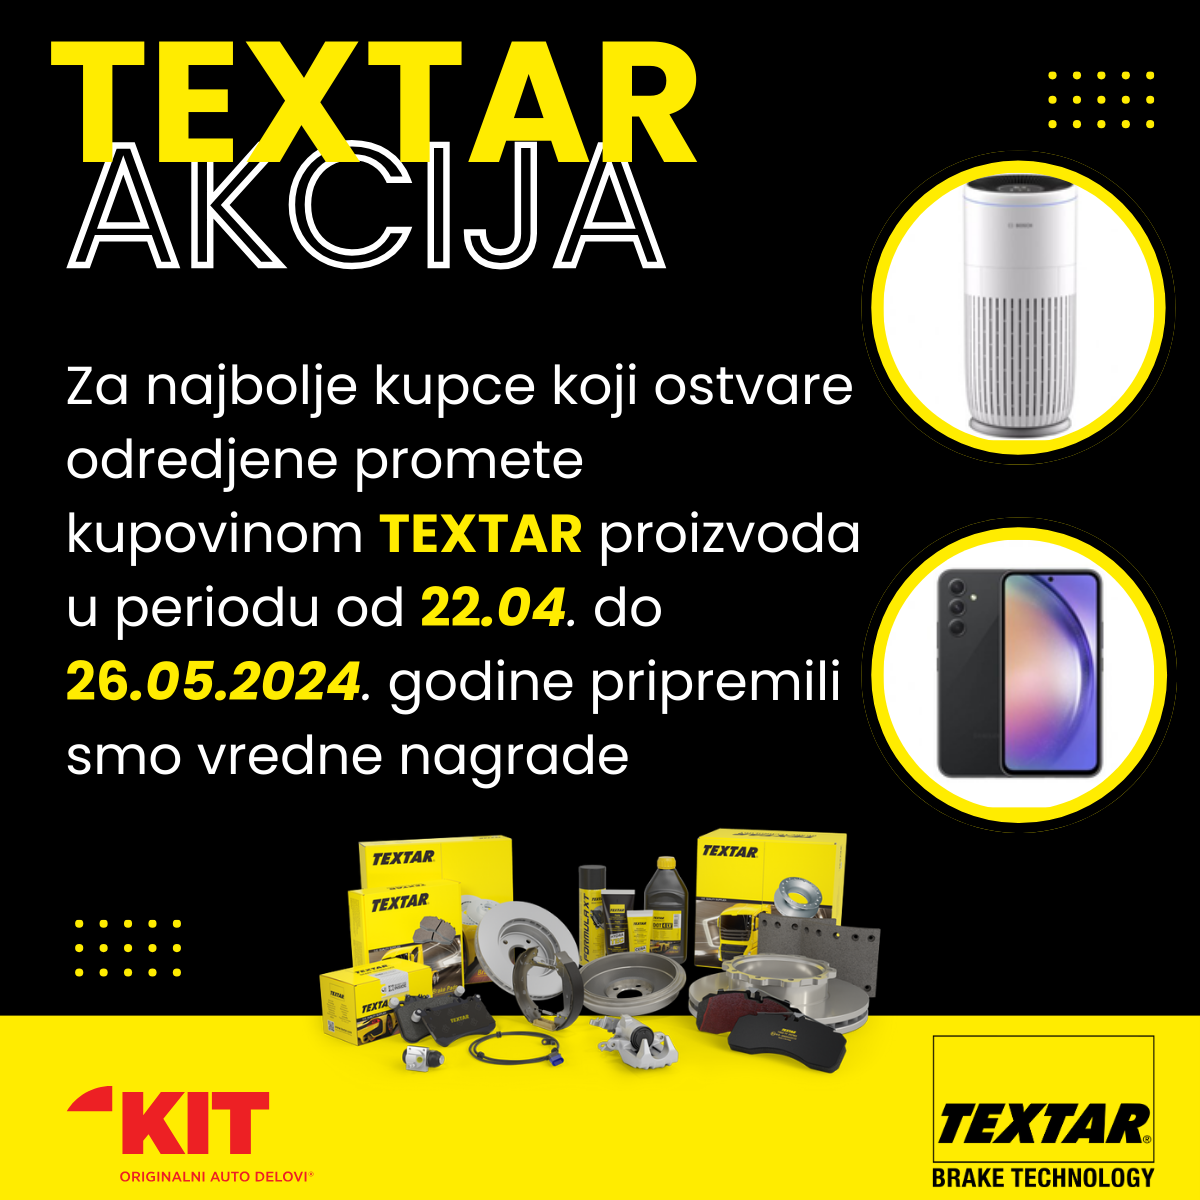 TEXTAR i KIT Commerce akcija